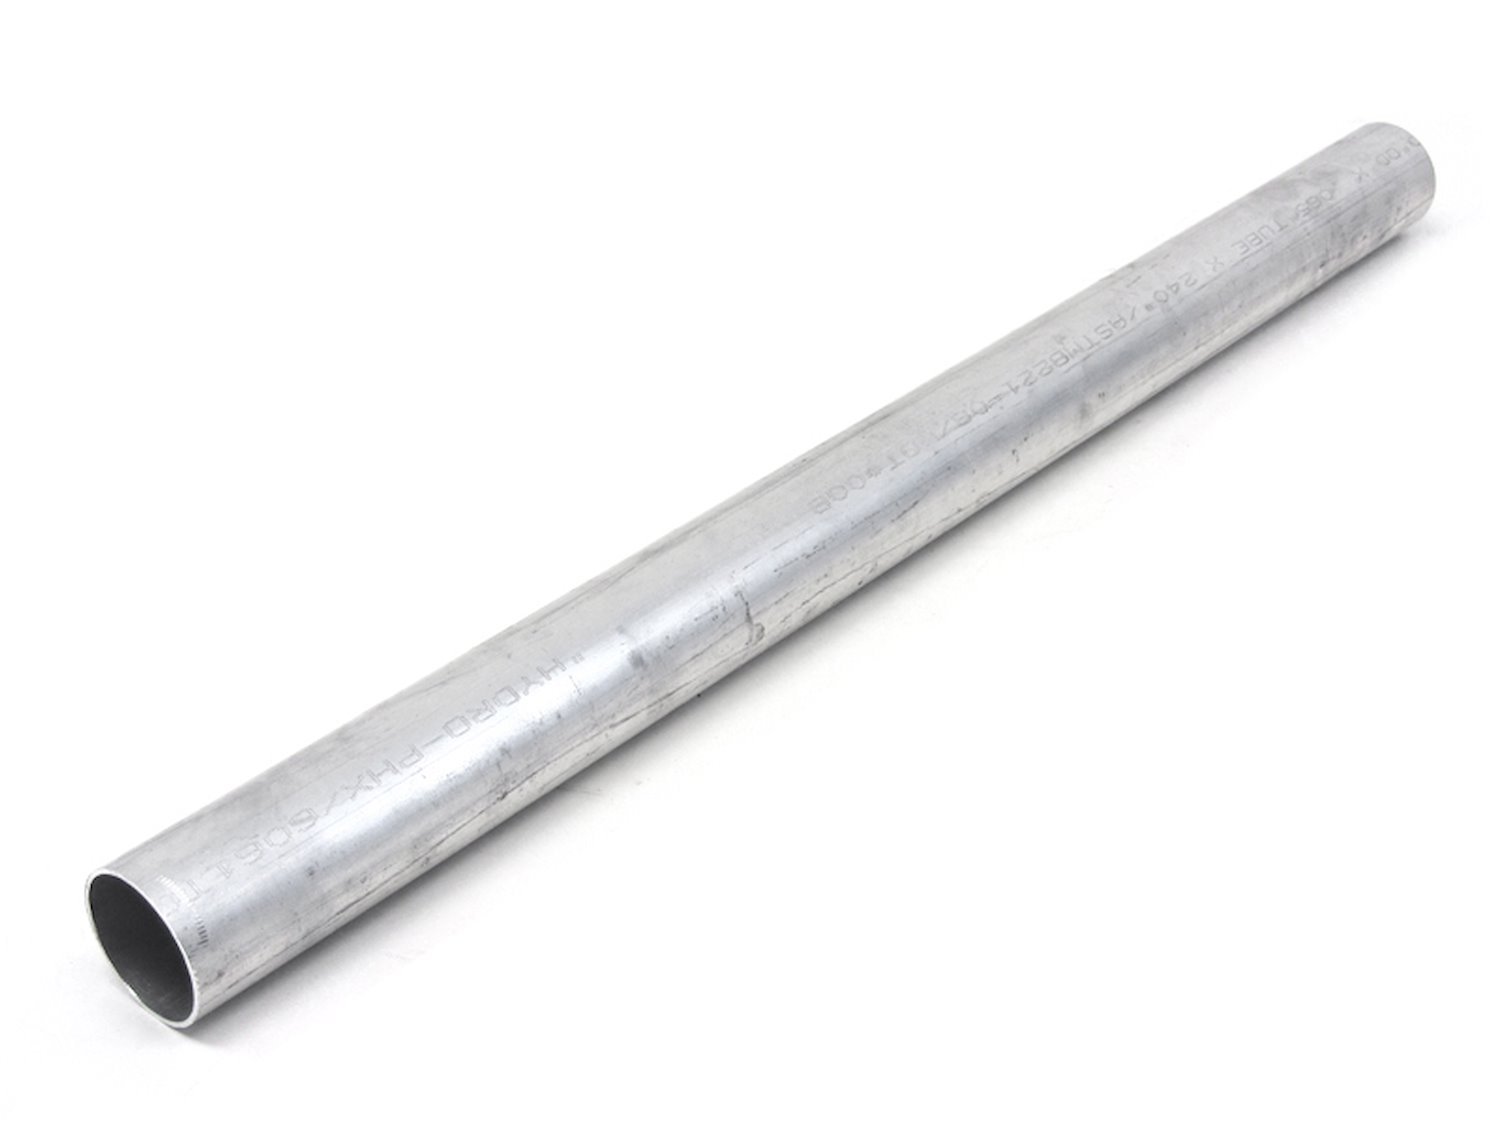 AST-3F-225 Aluminum Tubing, 6061 Aluminum, Straight Tubing, 2-1/4 in. OD, Seamless, Raw Finish, 3 ft. Long